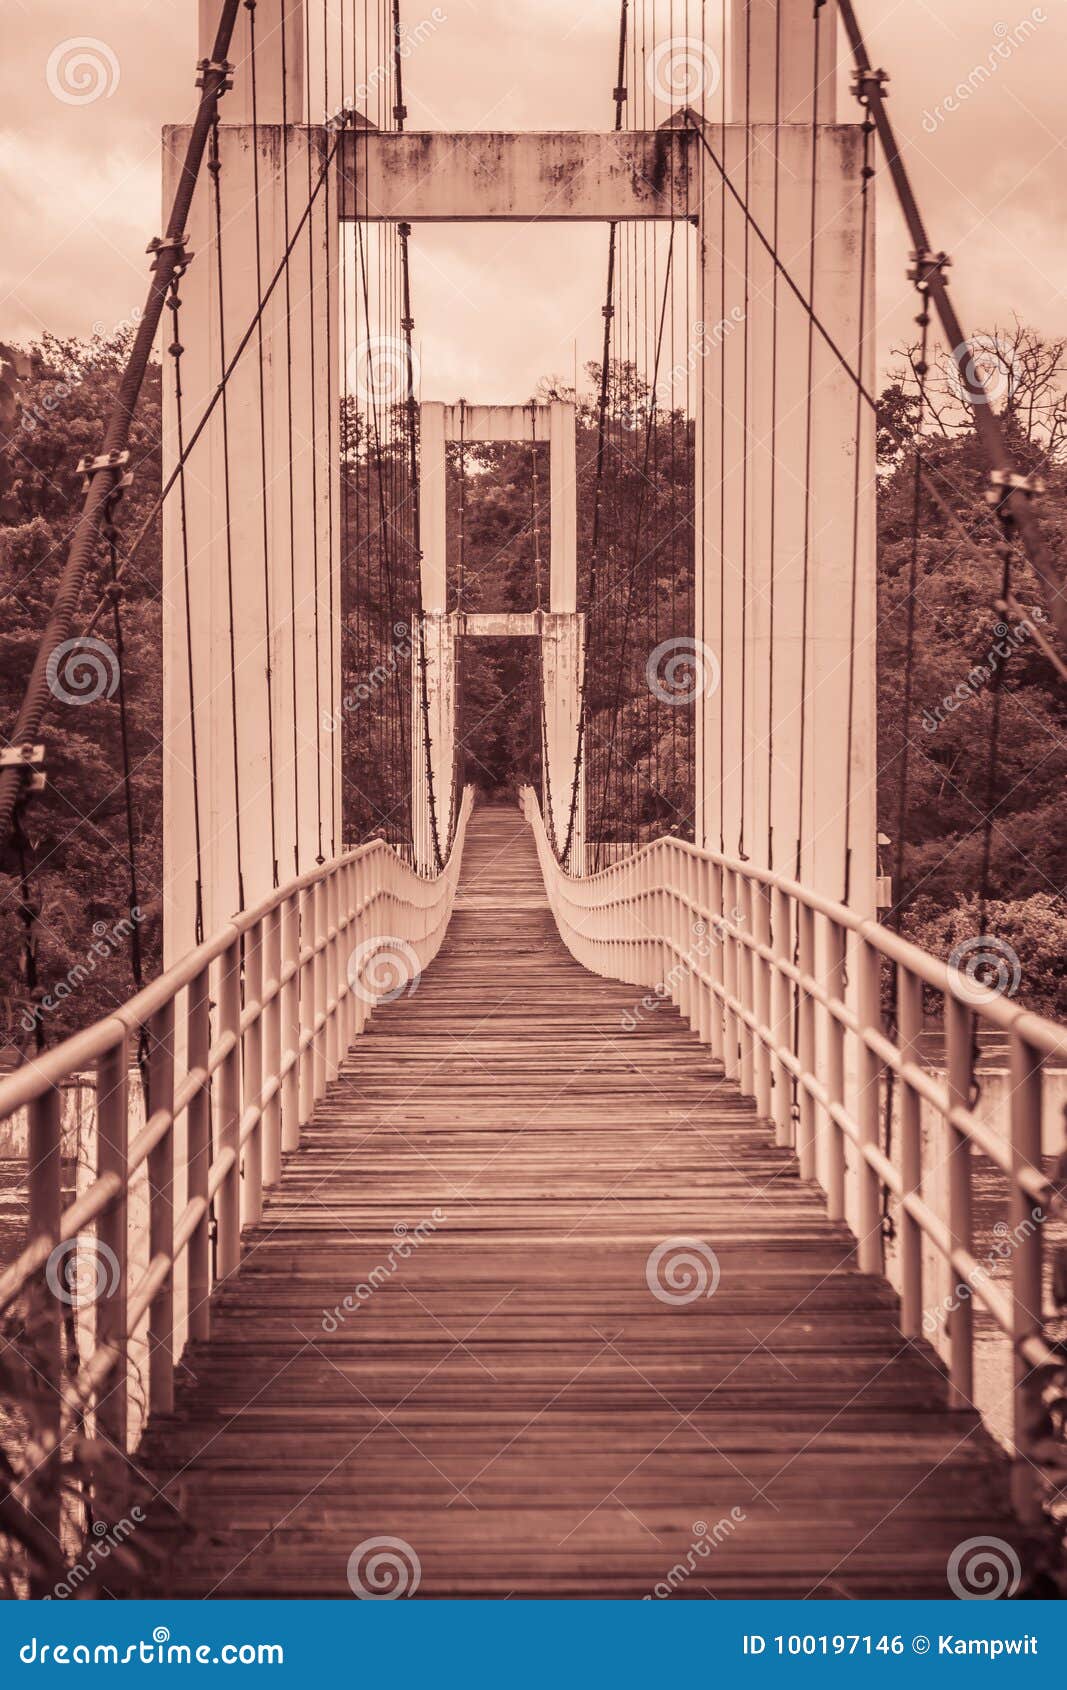 1,100+ Wood Hanging Bridge Stock Photos, Pictures & Royalty-Free